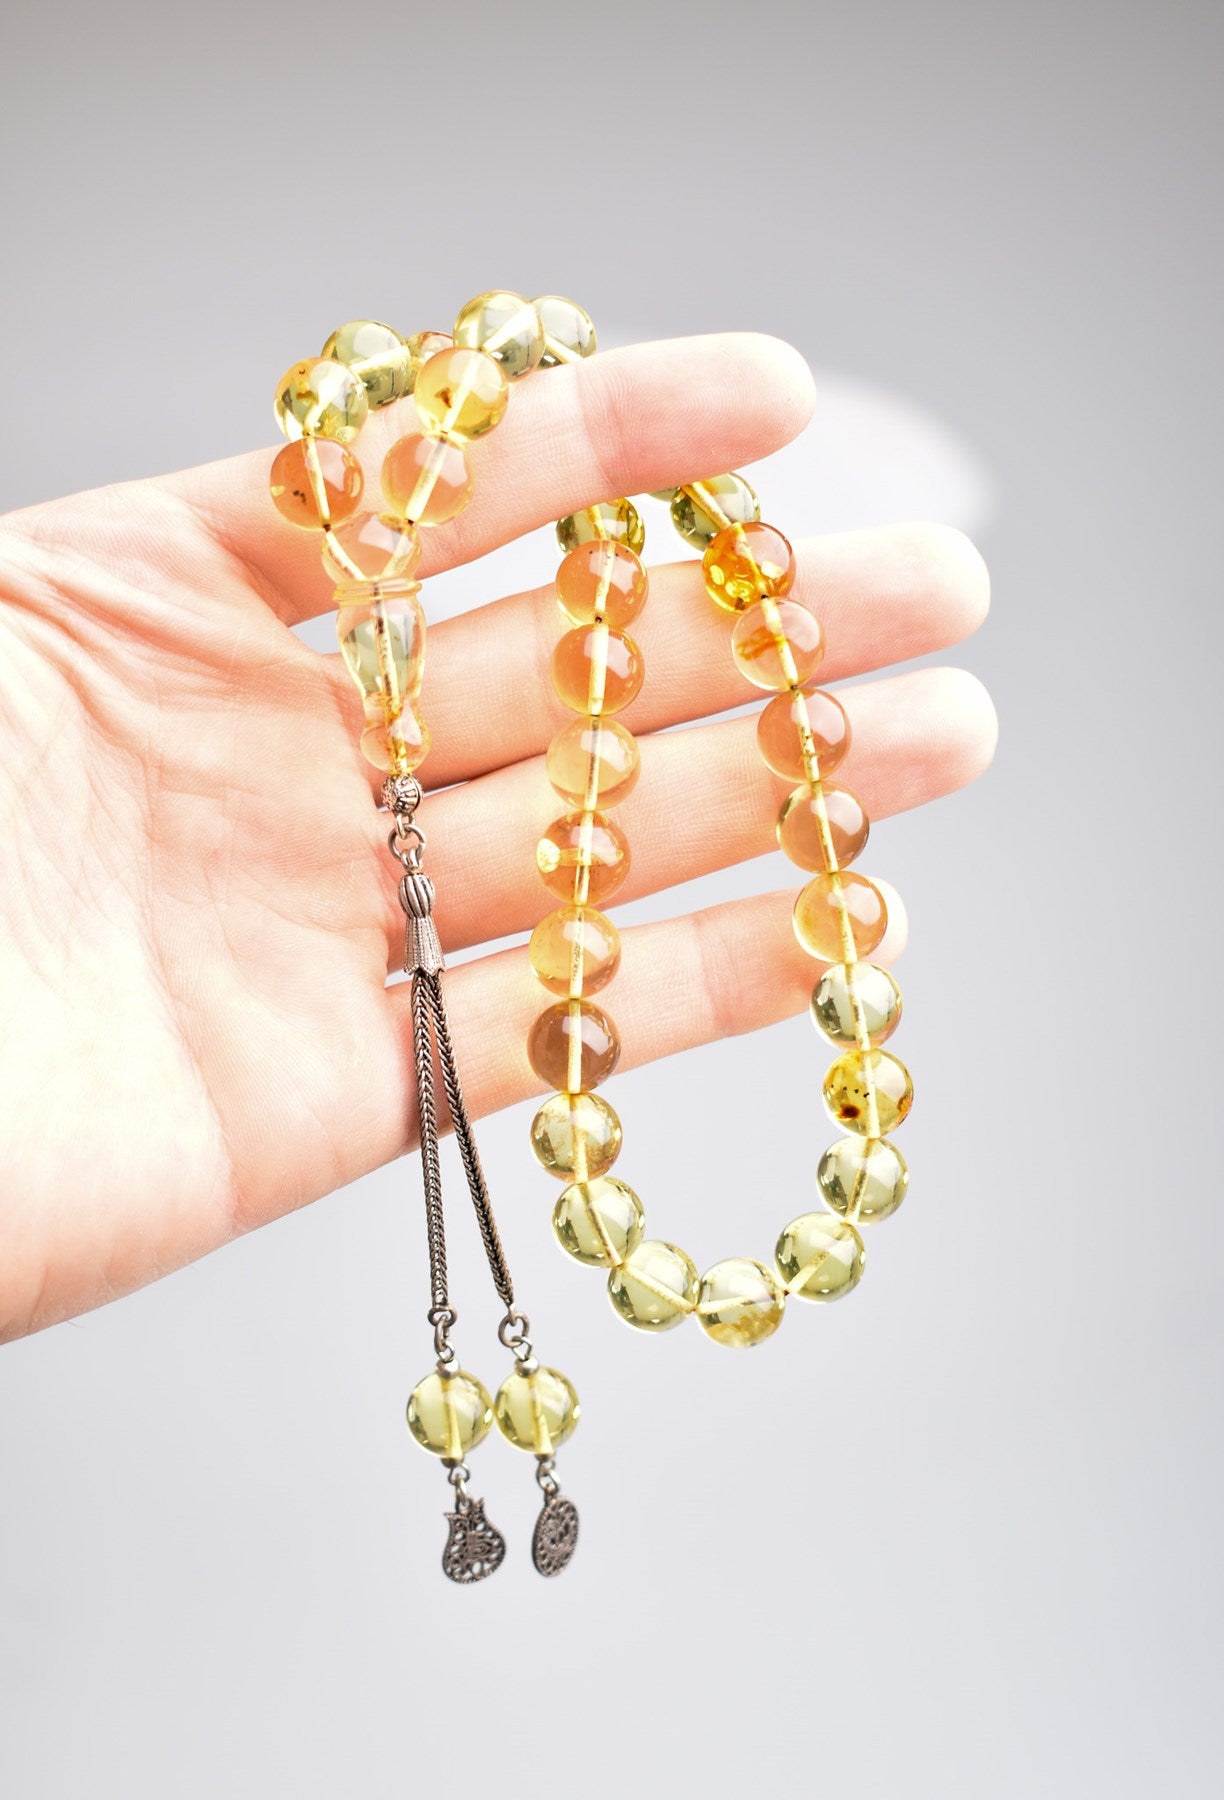 Amber Prayer Beads - 33.3gr / 33pc